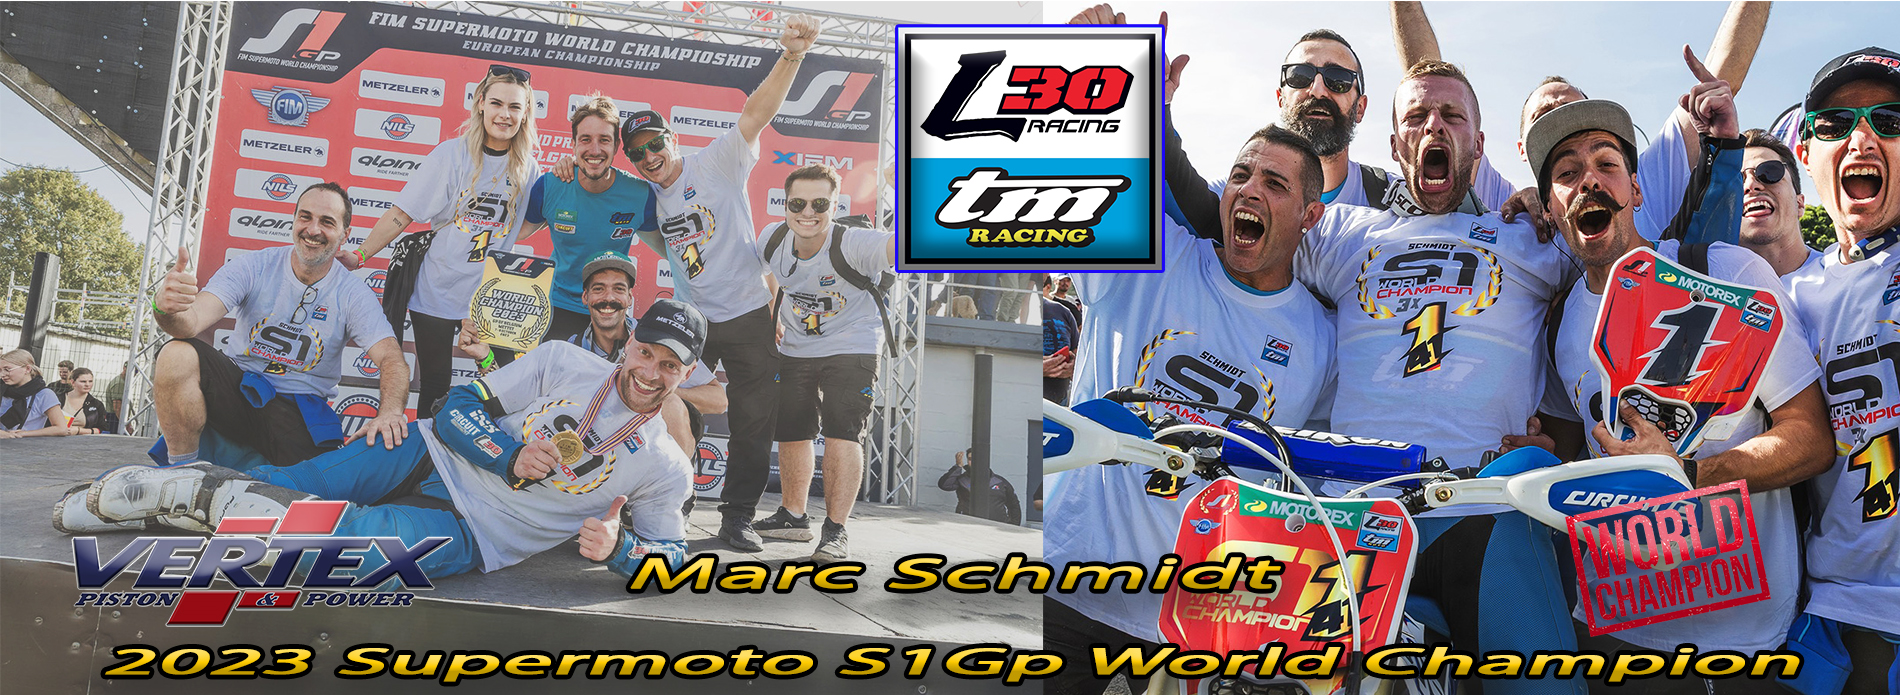 Vertex & Tm L30 & Matt Marc Schmidt SuperMoto S1Gp 2023 World Champion